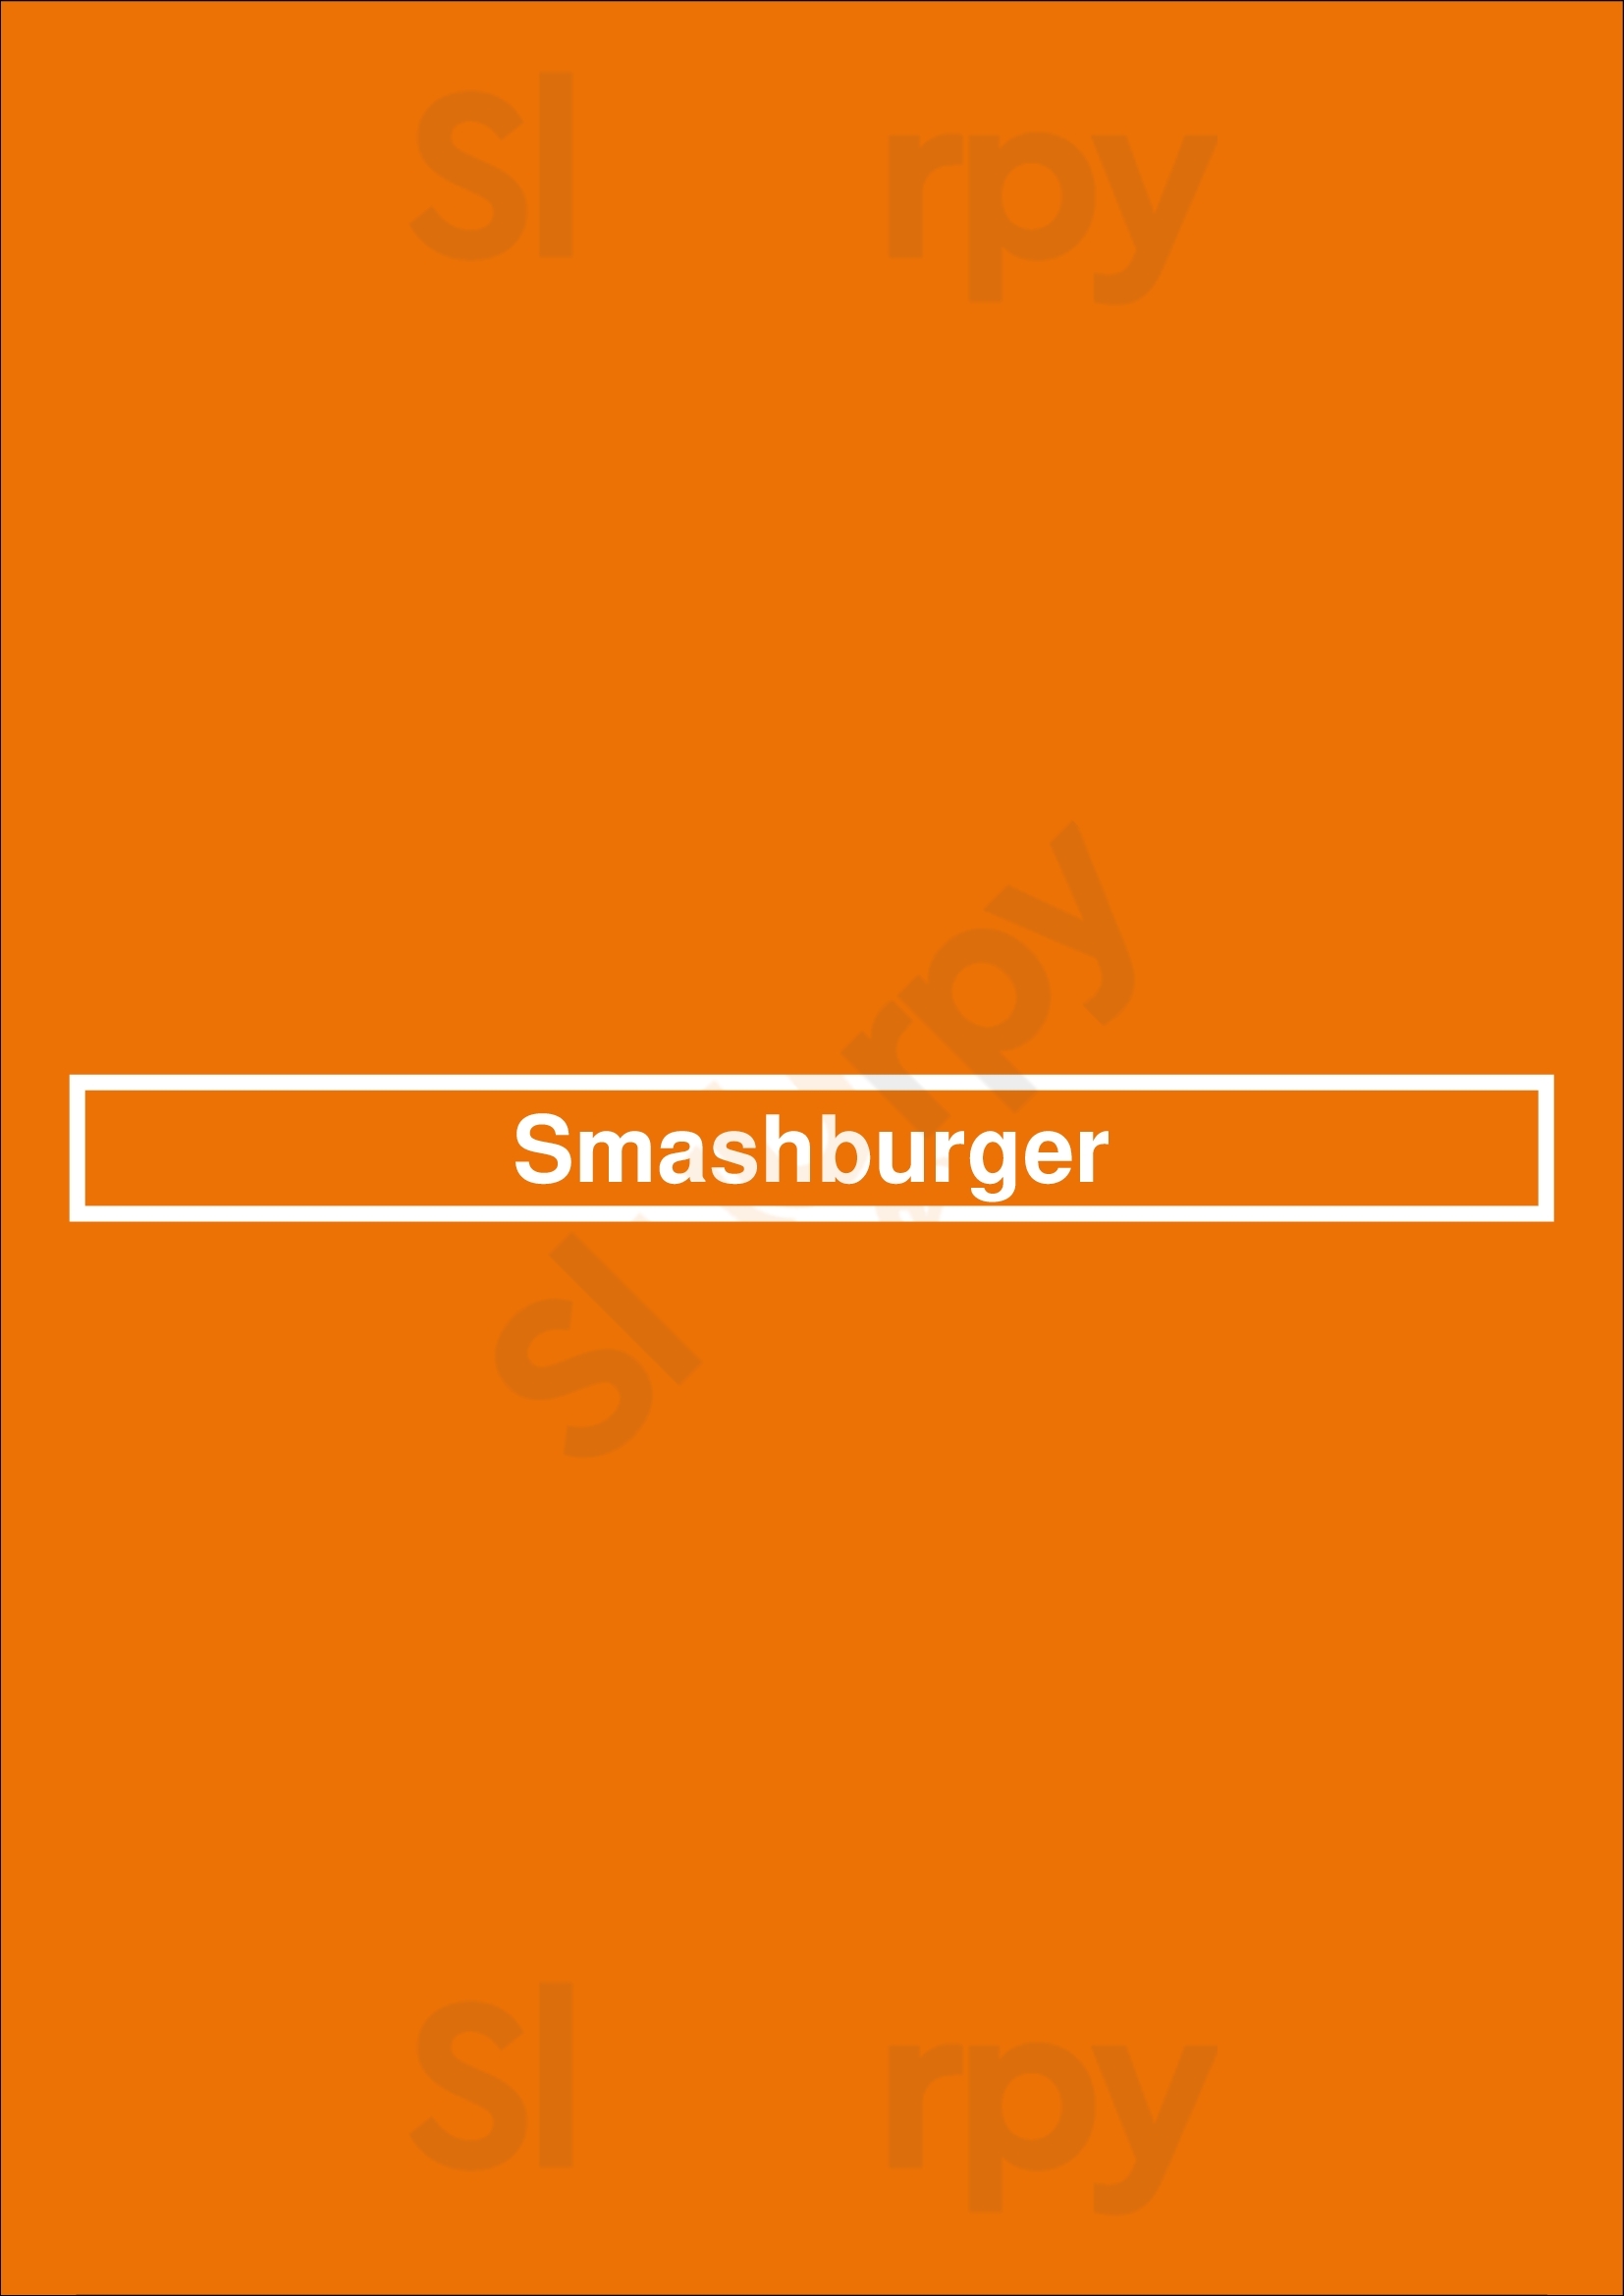 Smashburger Phoenix Menu - 1